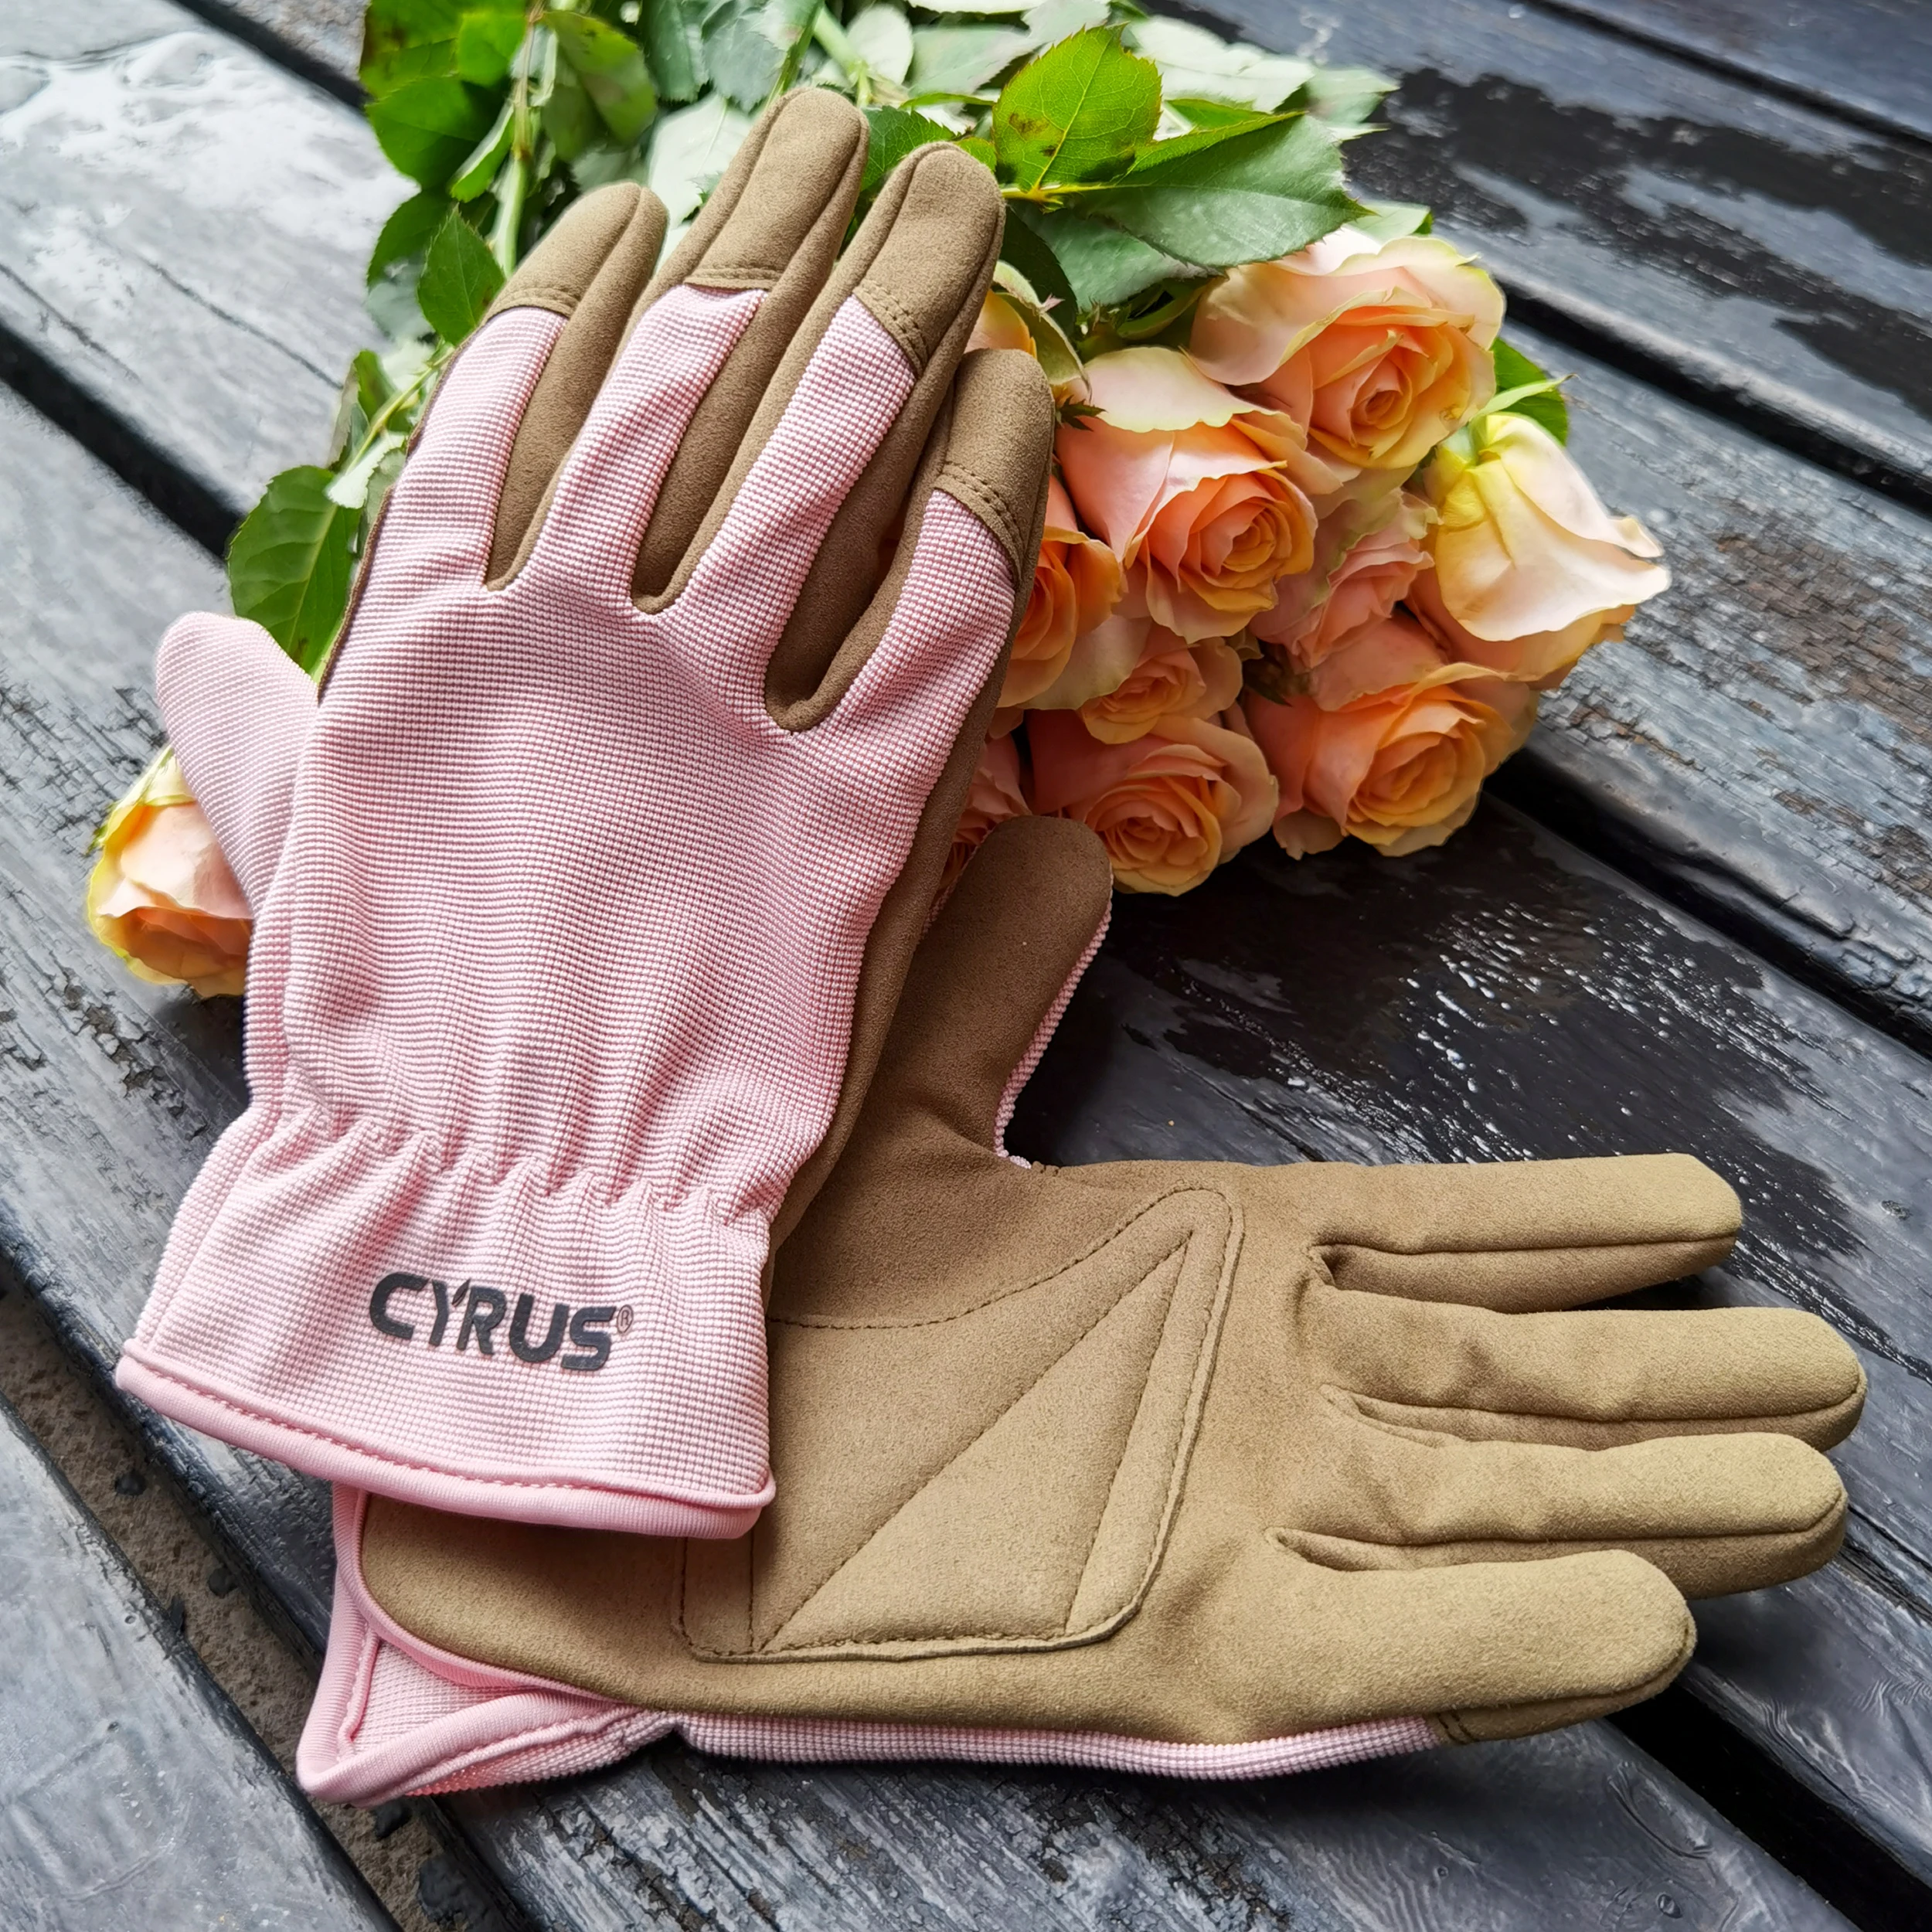 Gardening Gloves Garden Gloves Women Work Cut Resistant Leather Working Yard Weeding Digging Pruning Pink Ladies Hands